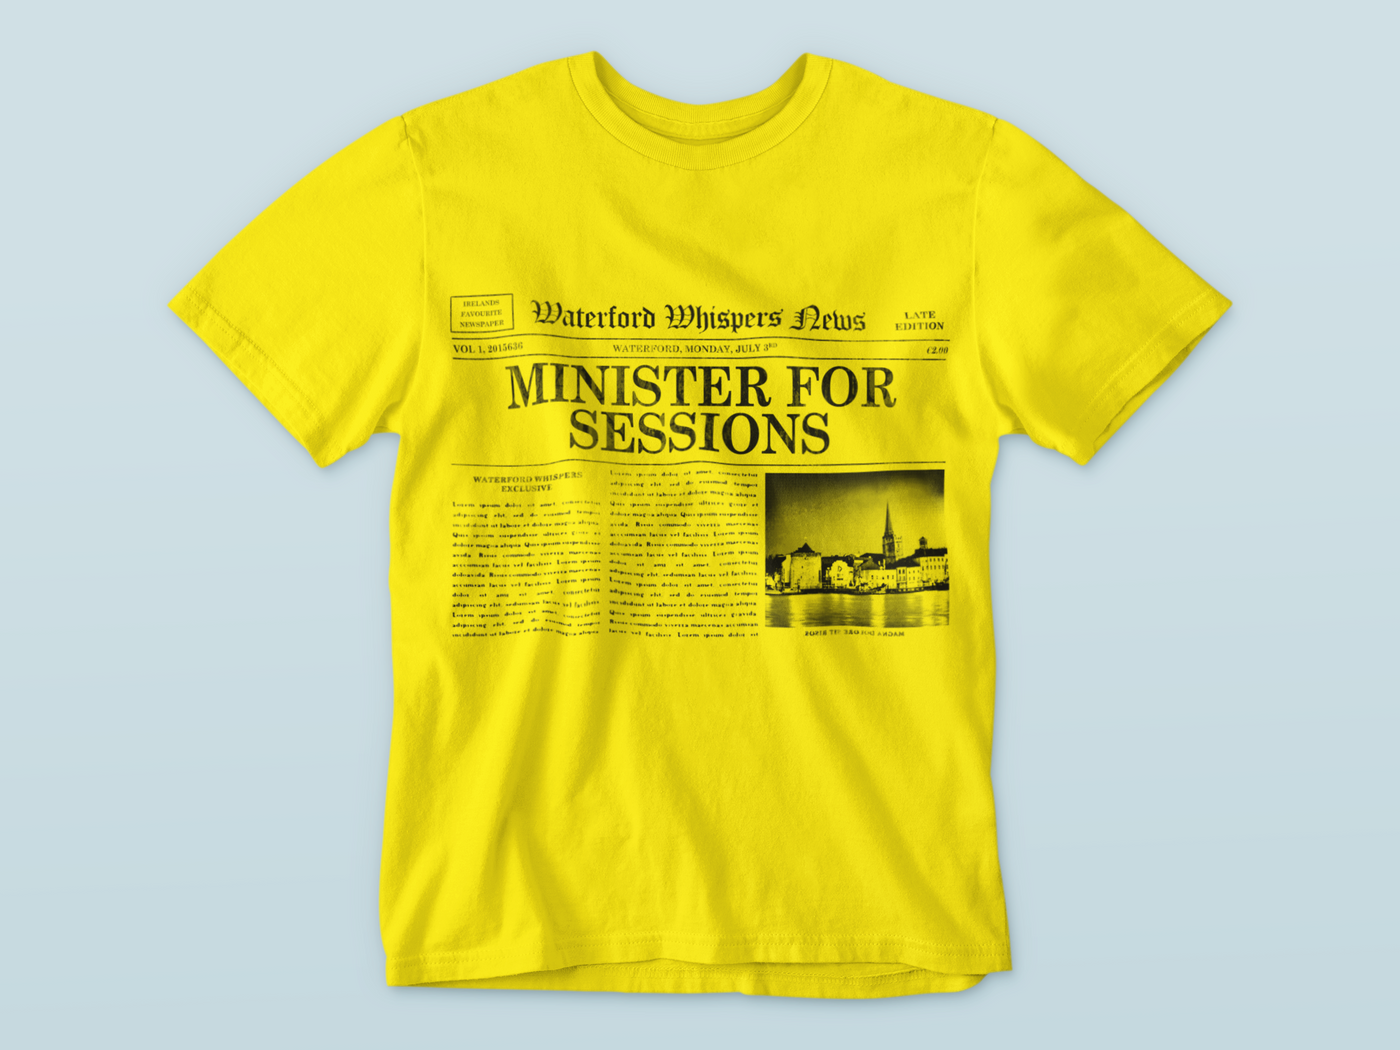 Minister for Sessions - Premium WWN Headline T-shirt